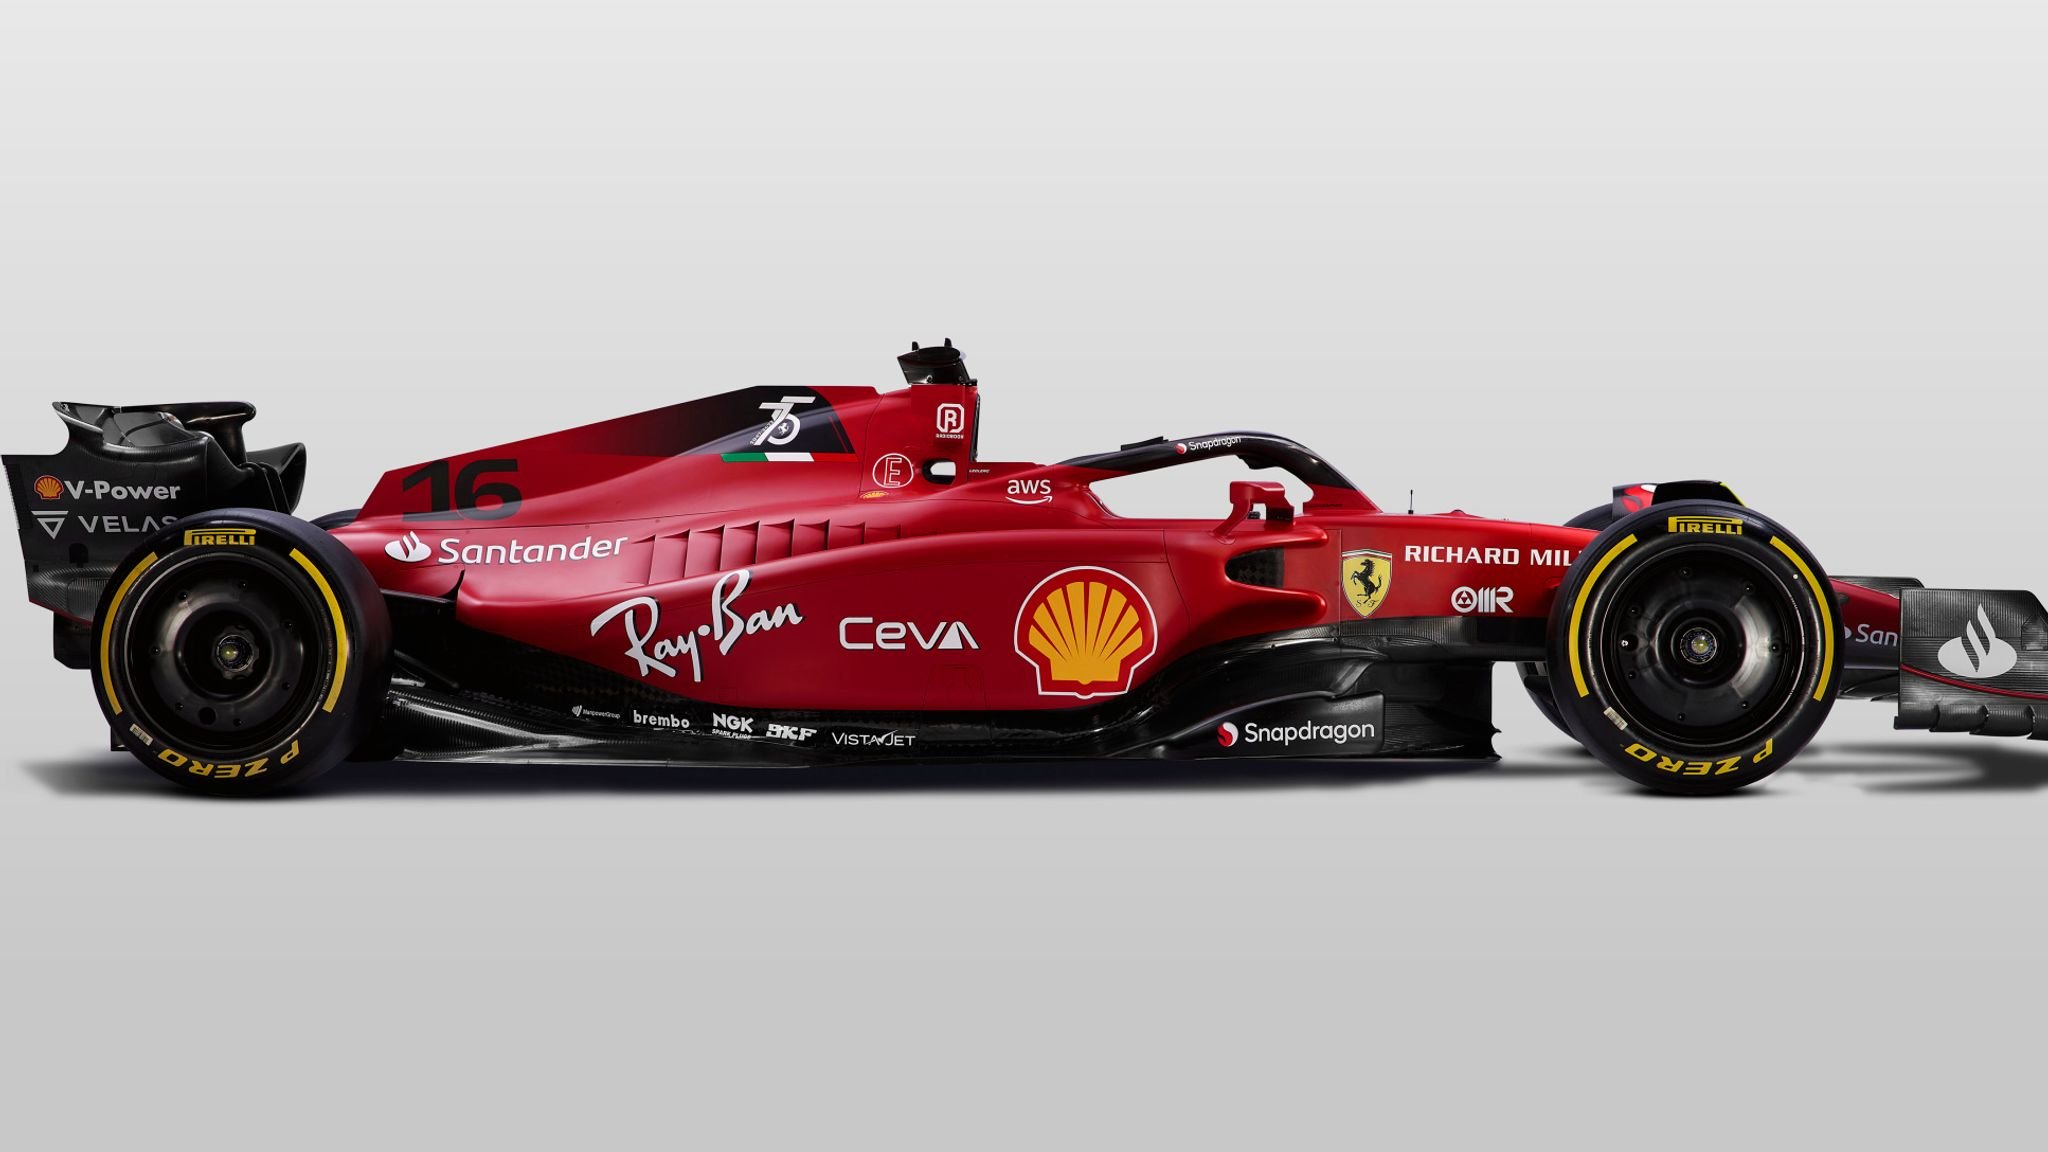 Ferrari reveal fierce new car for 2022 Formula 1 season as Scuderia bid to return to winning ways